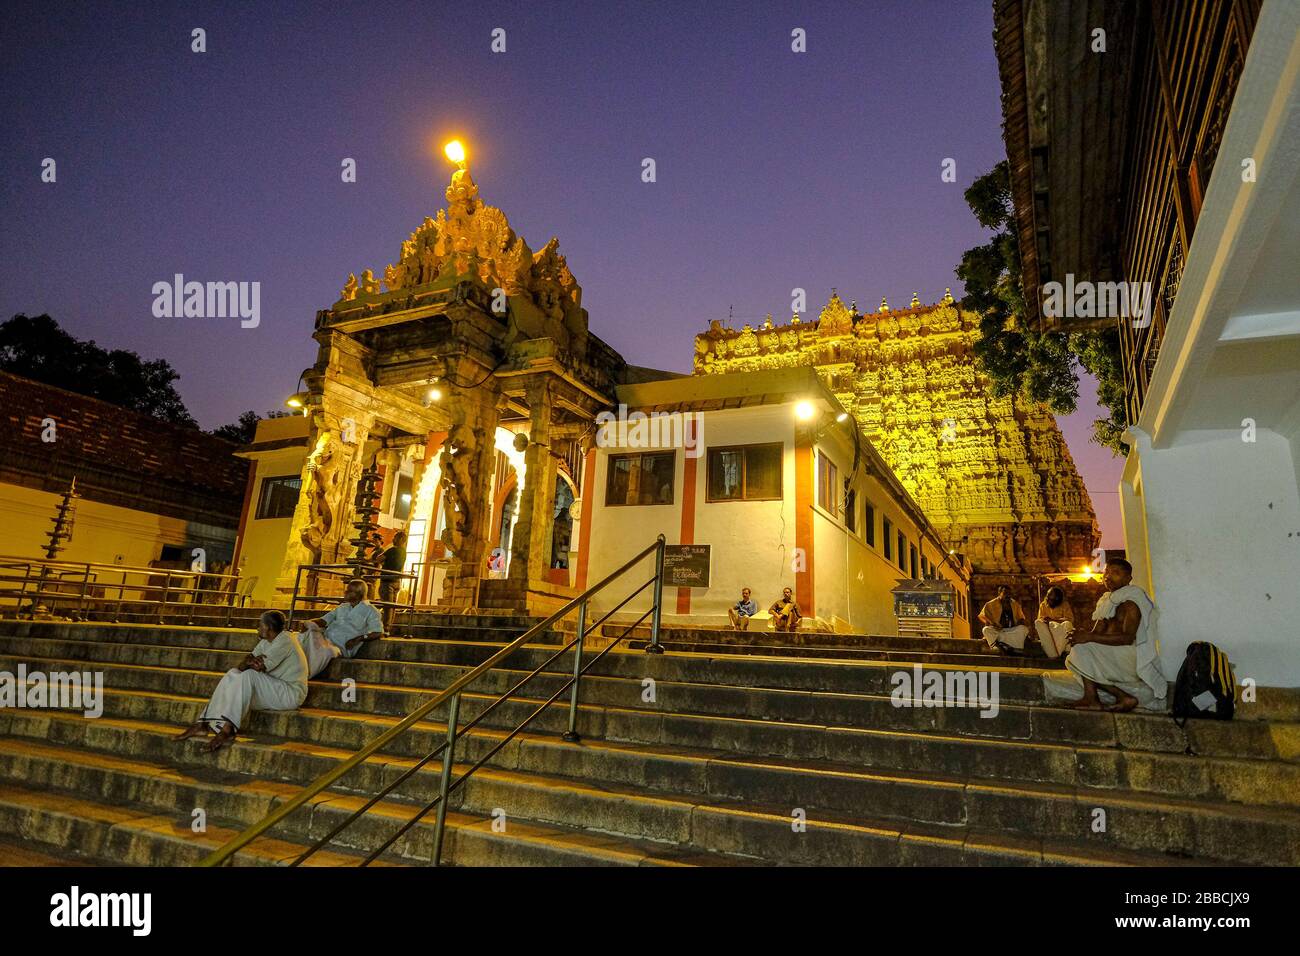 Thiruvananthapuram, India - March 2020: People sitting on the steps of the Shri Padmanbhaswamy temple on March 13, 2020 in Thiruvananthapuram, India. Stock Photo